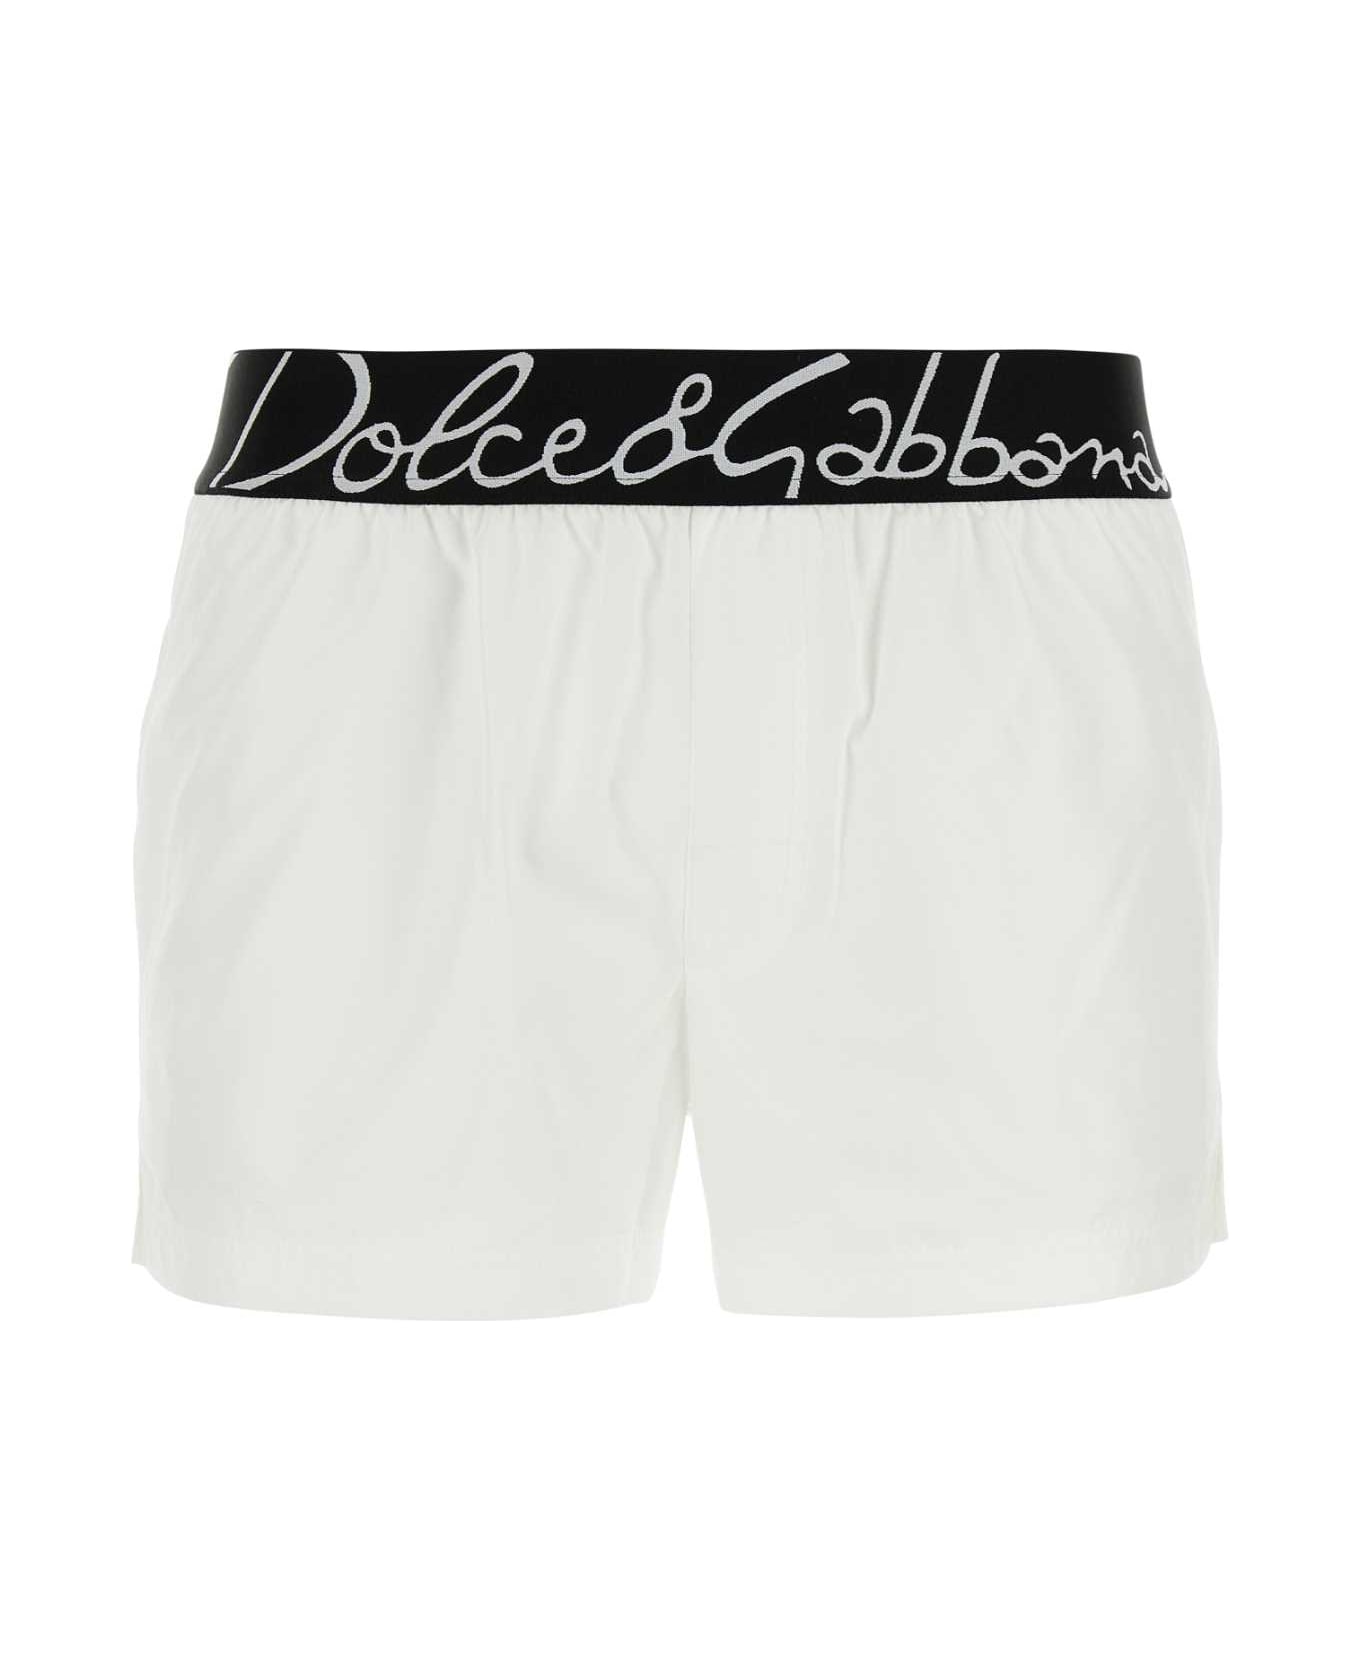 Dolce & Gabbana Swimming Shorts - BIANCOOTTICO ショートパンツ